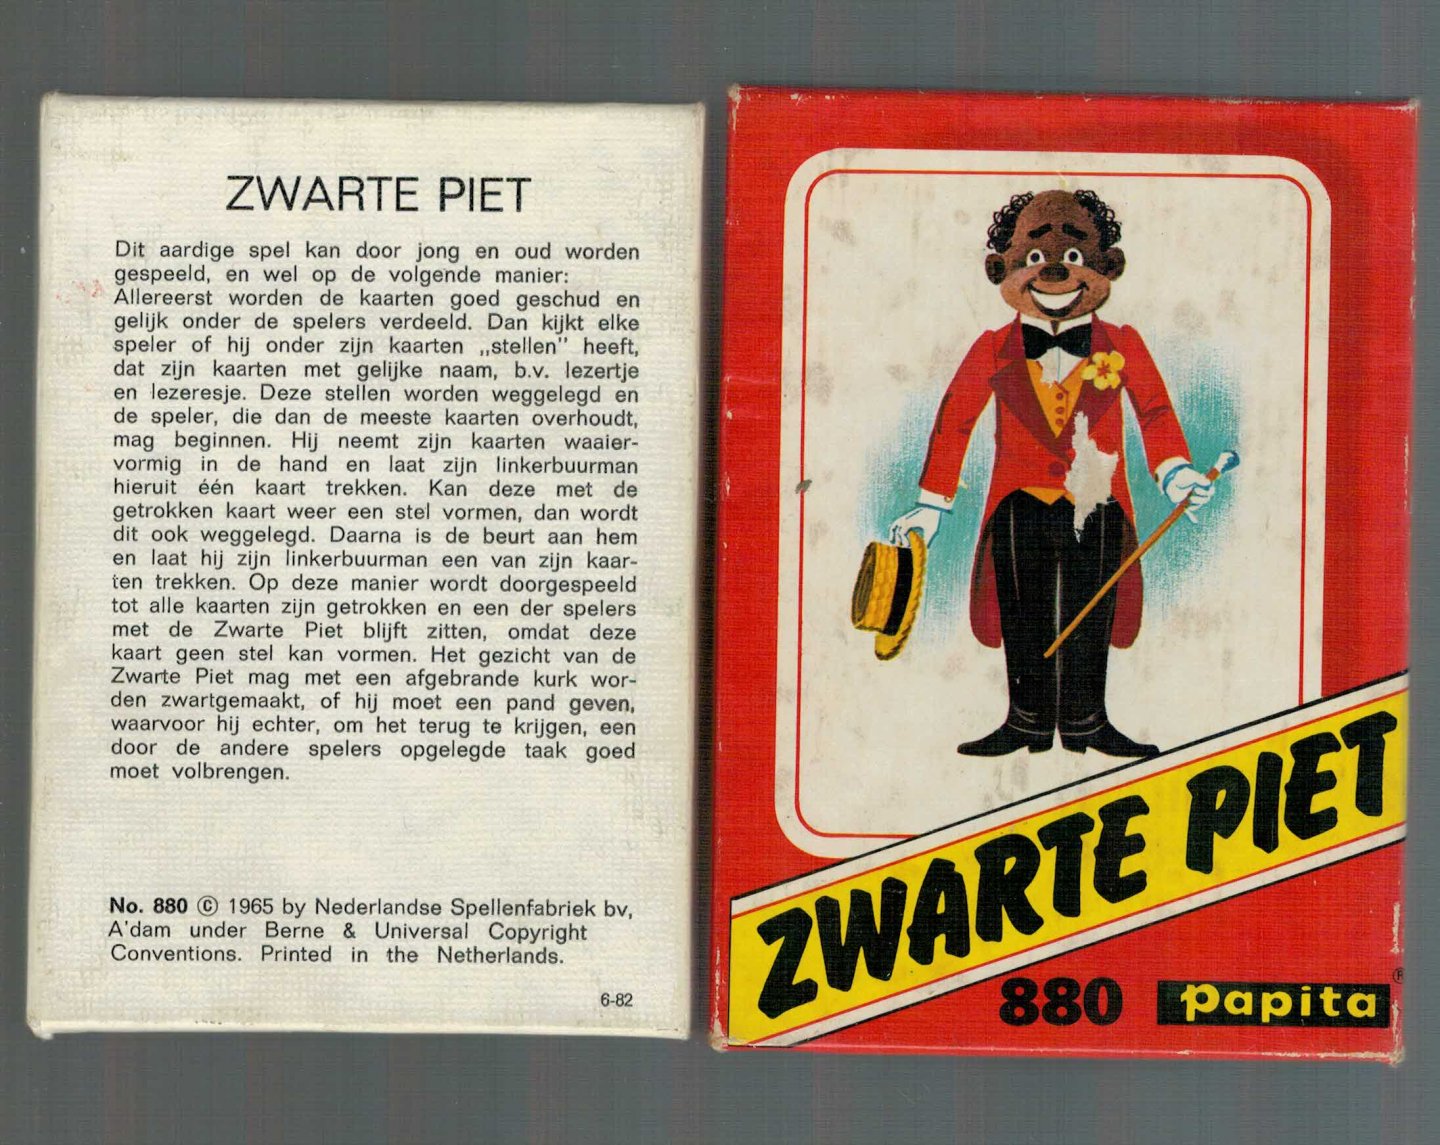 nn - Zwarte Piet 880 Papita spel